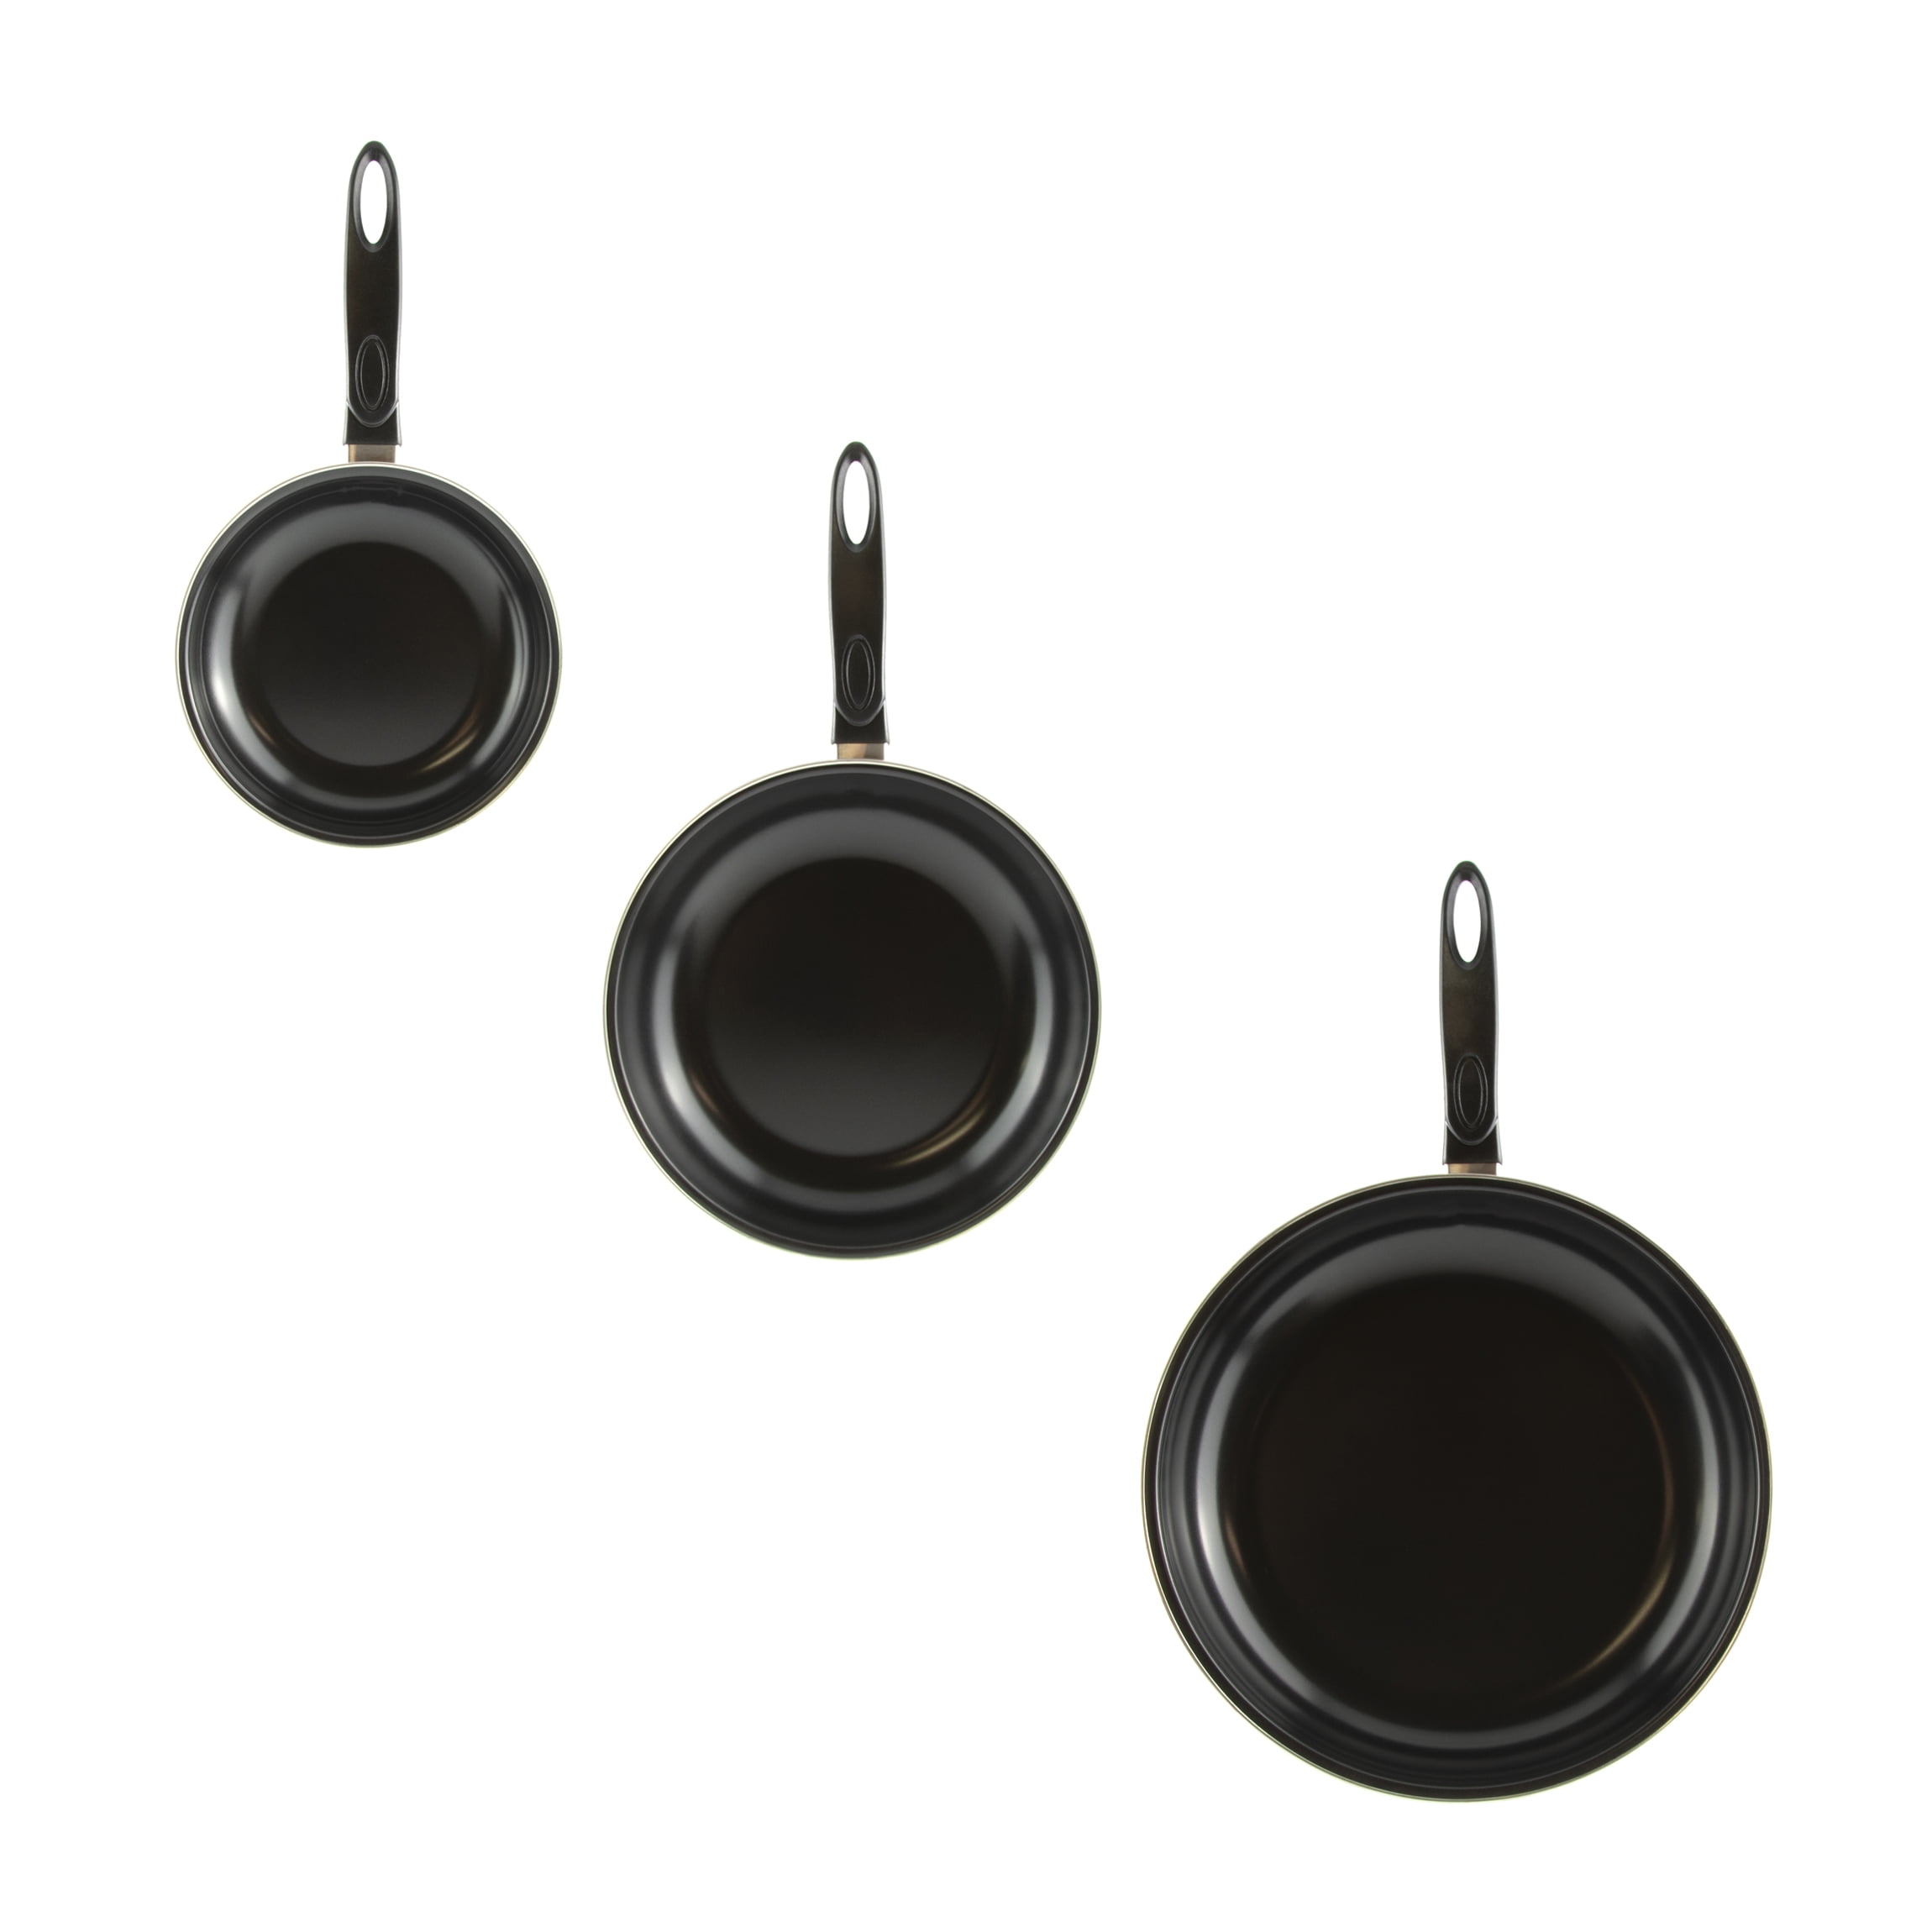 Frying Pan Set 3-Pc. Nonstick Aluminum Saute Pans for Cooking 